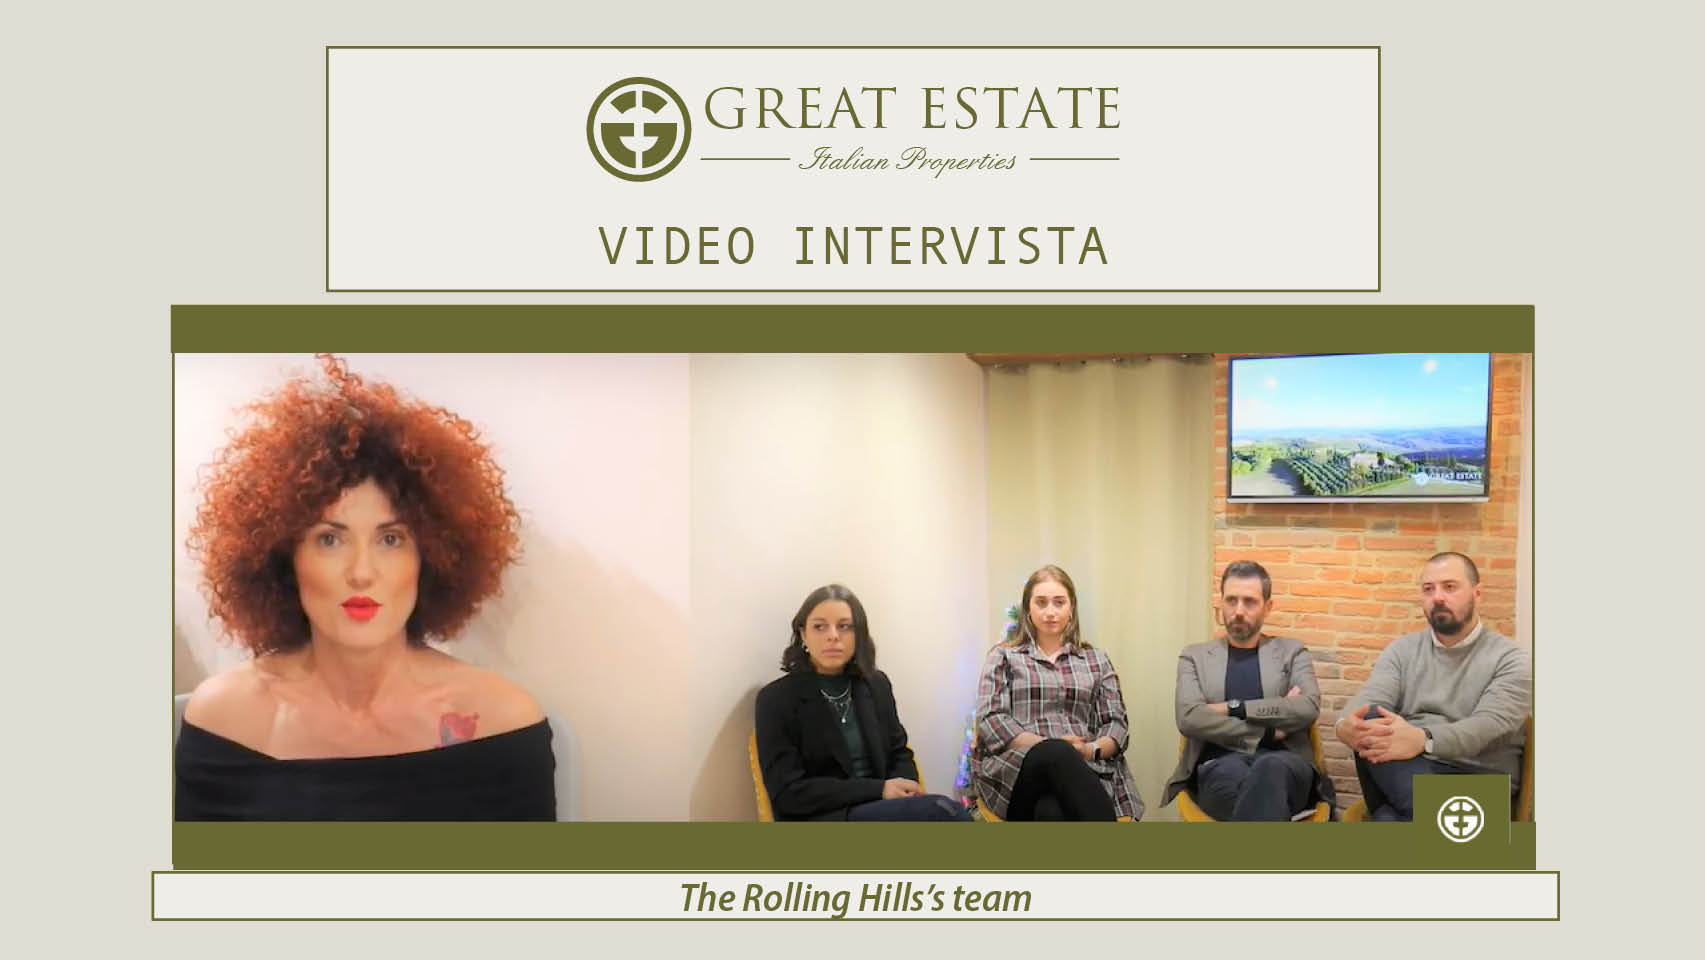 videointervista, rolling hills, partner great estate